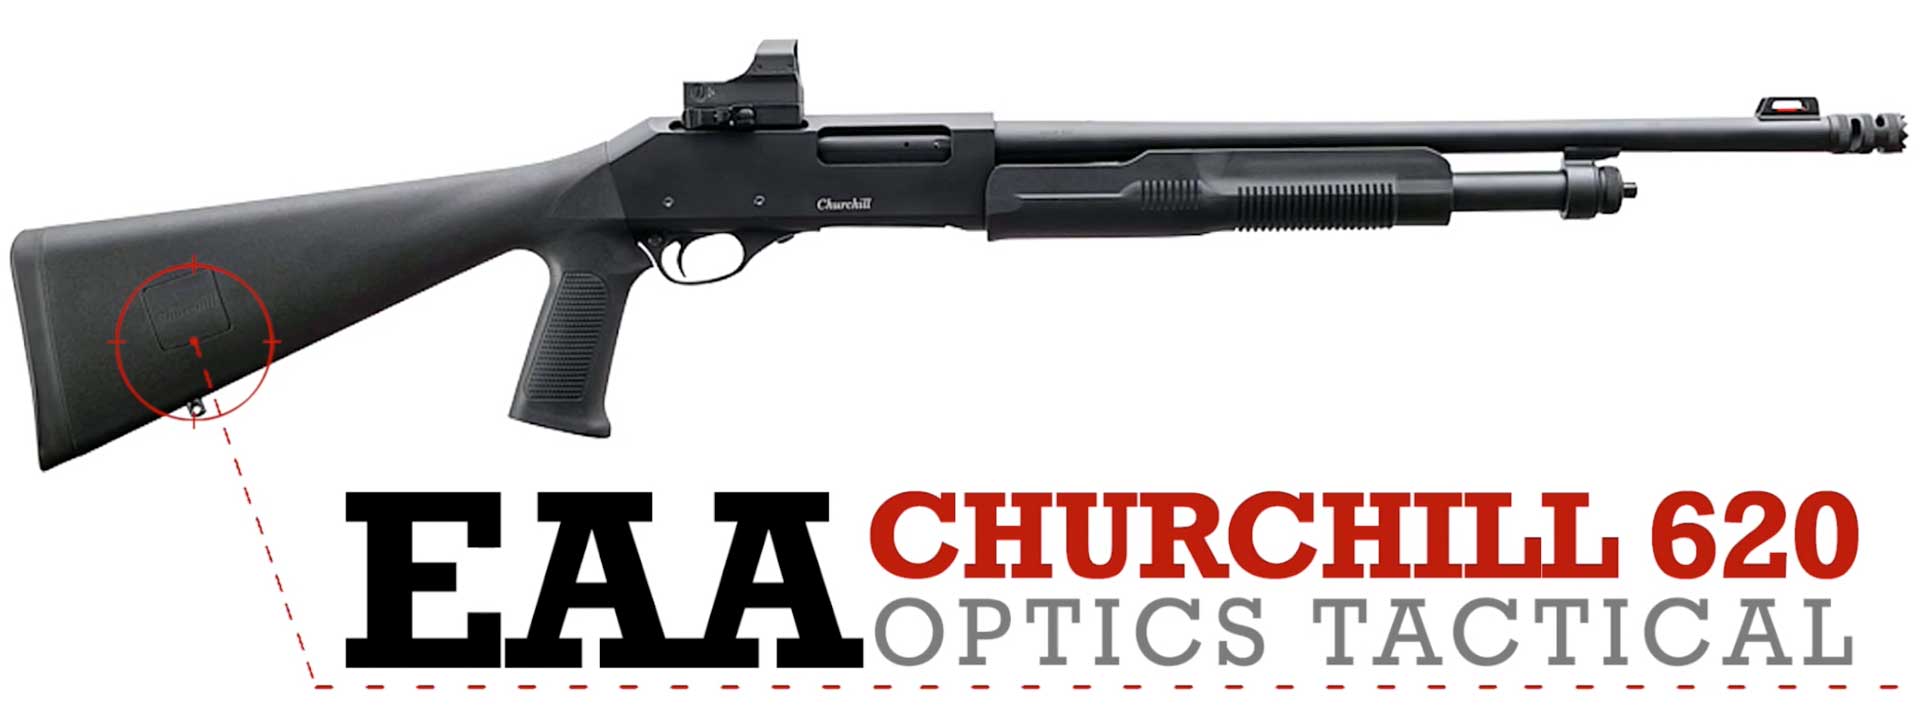 right side black shotgun pump-action gun text on image noting "EAA CHURCHILL 620 OPTICS TACTICAL"